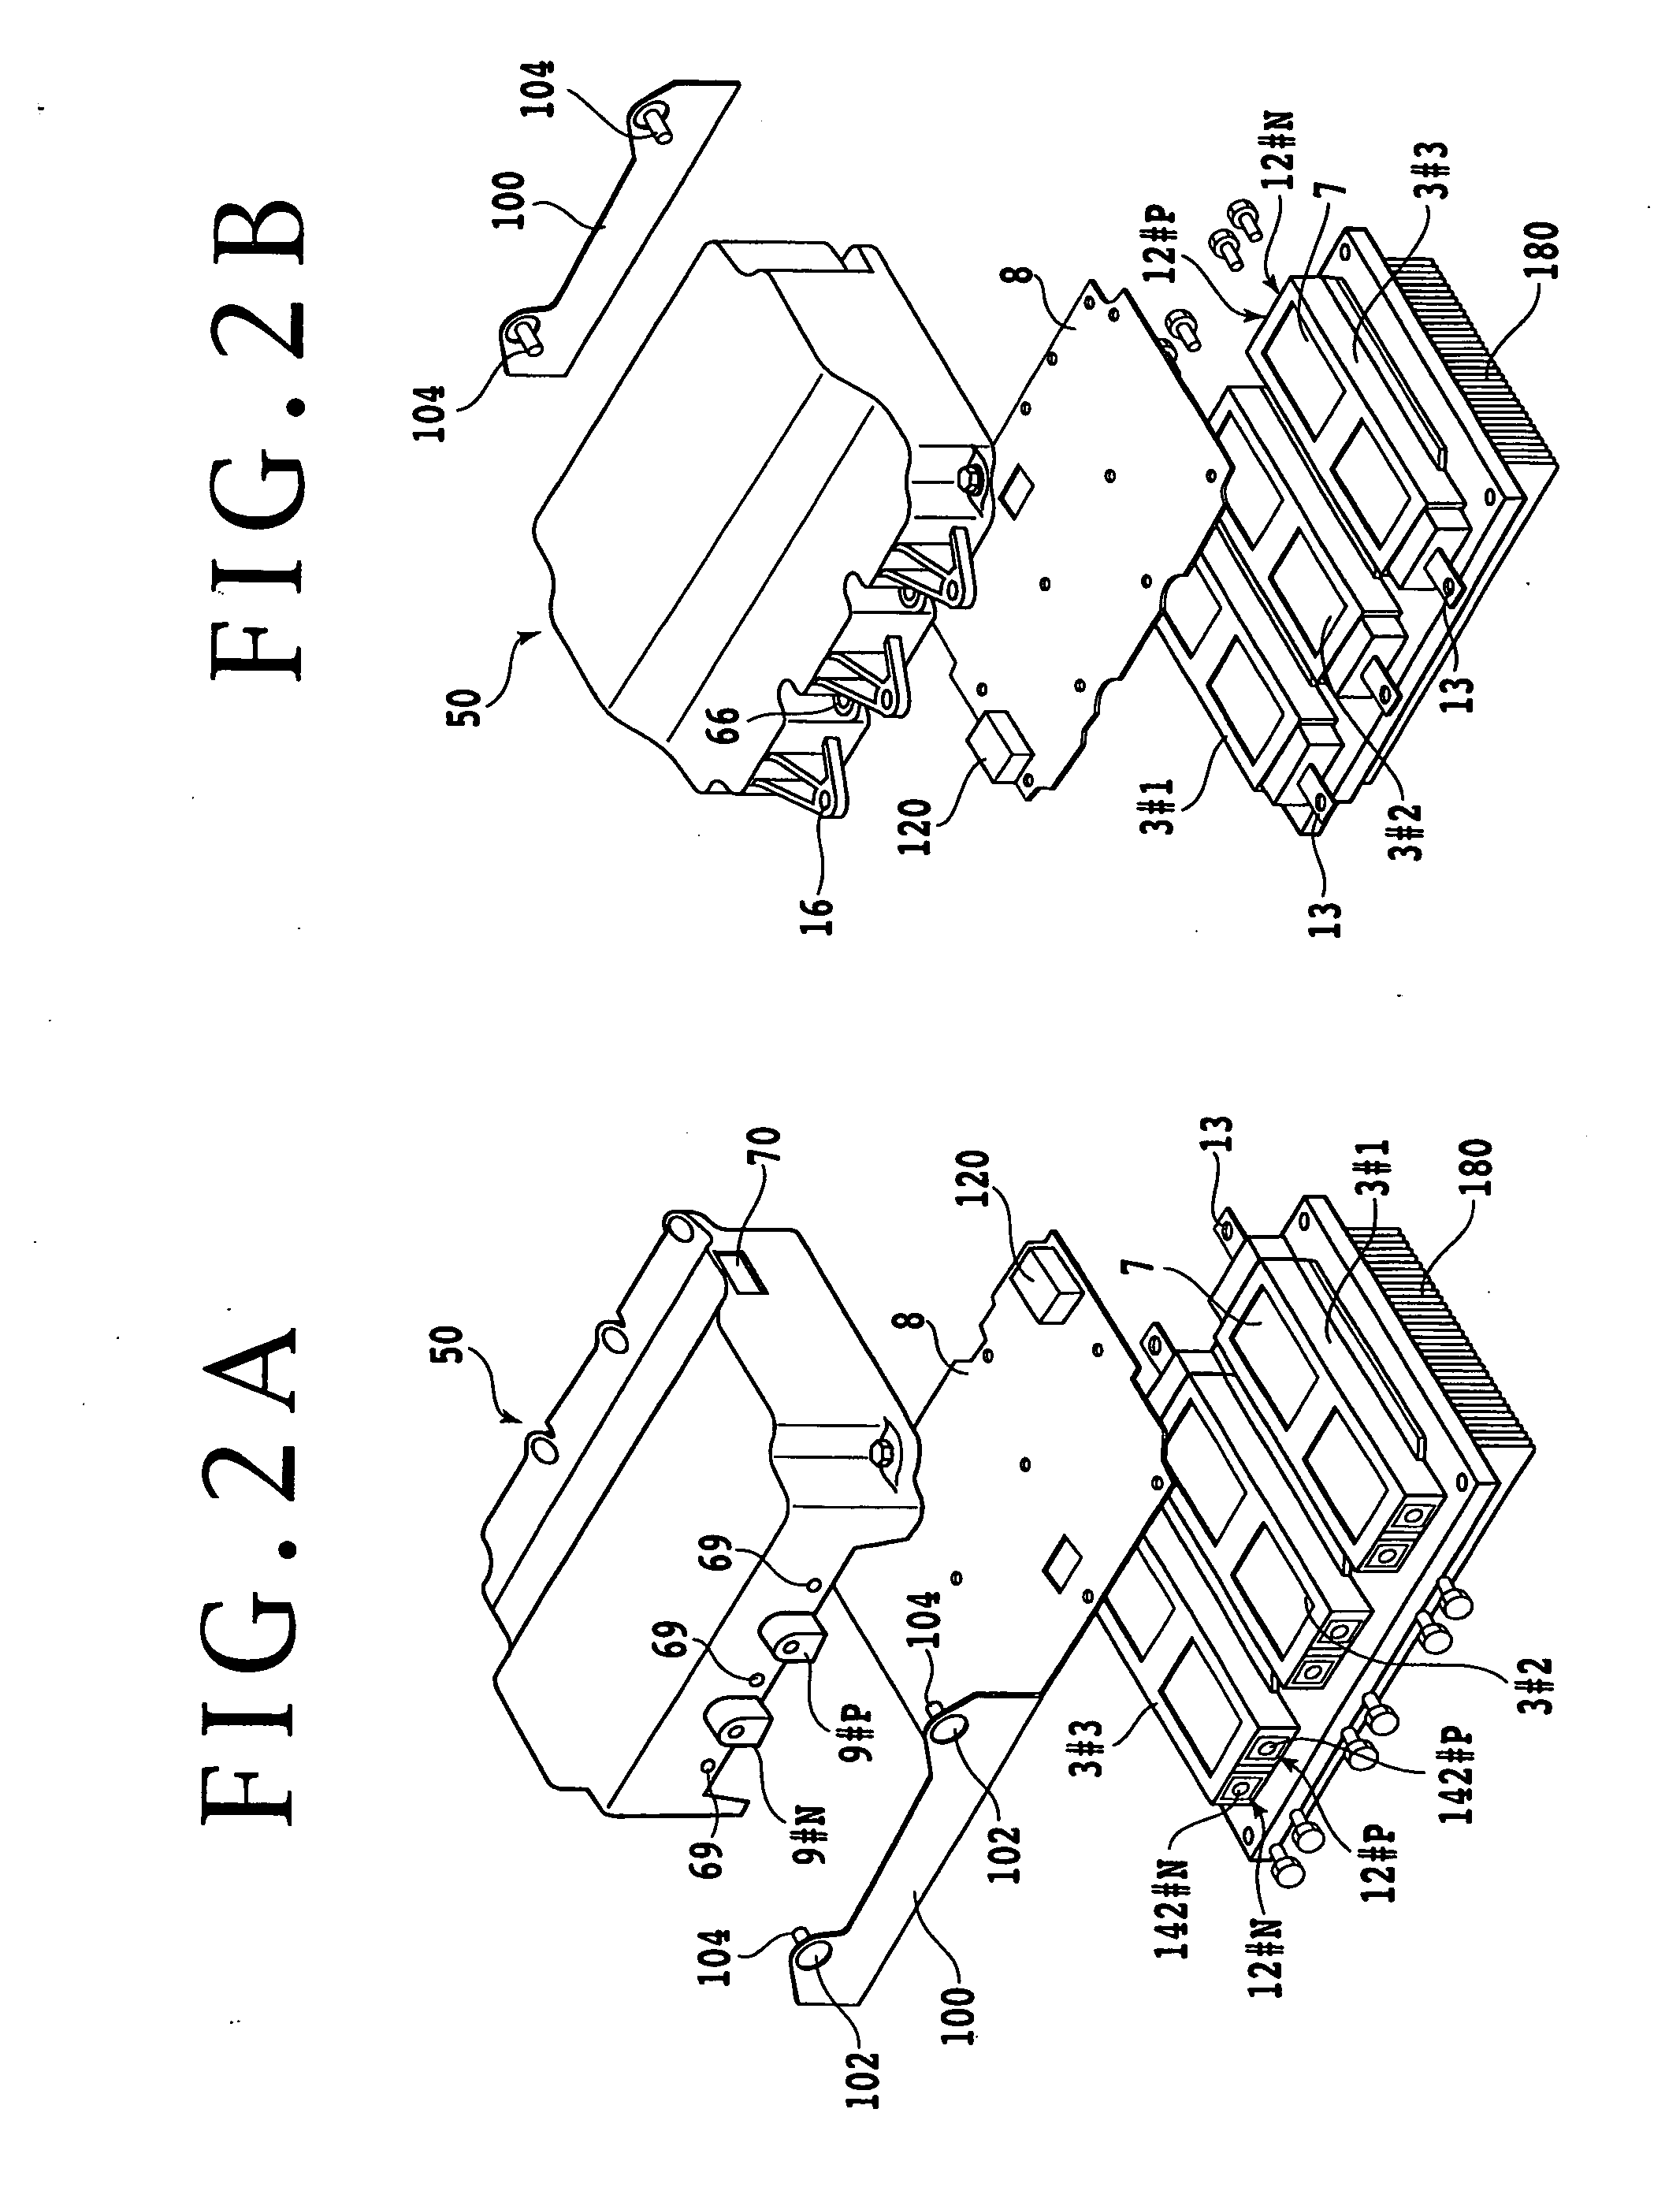 Capacitor mounting type inverter unit